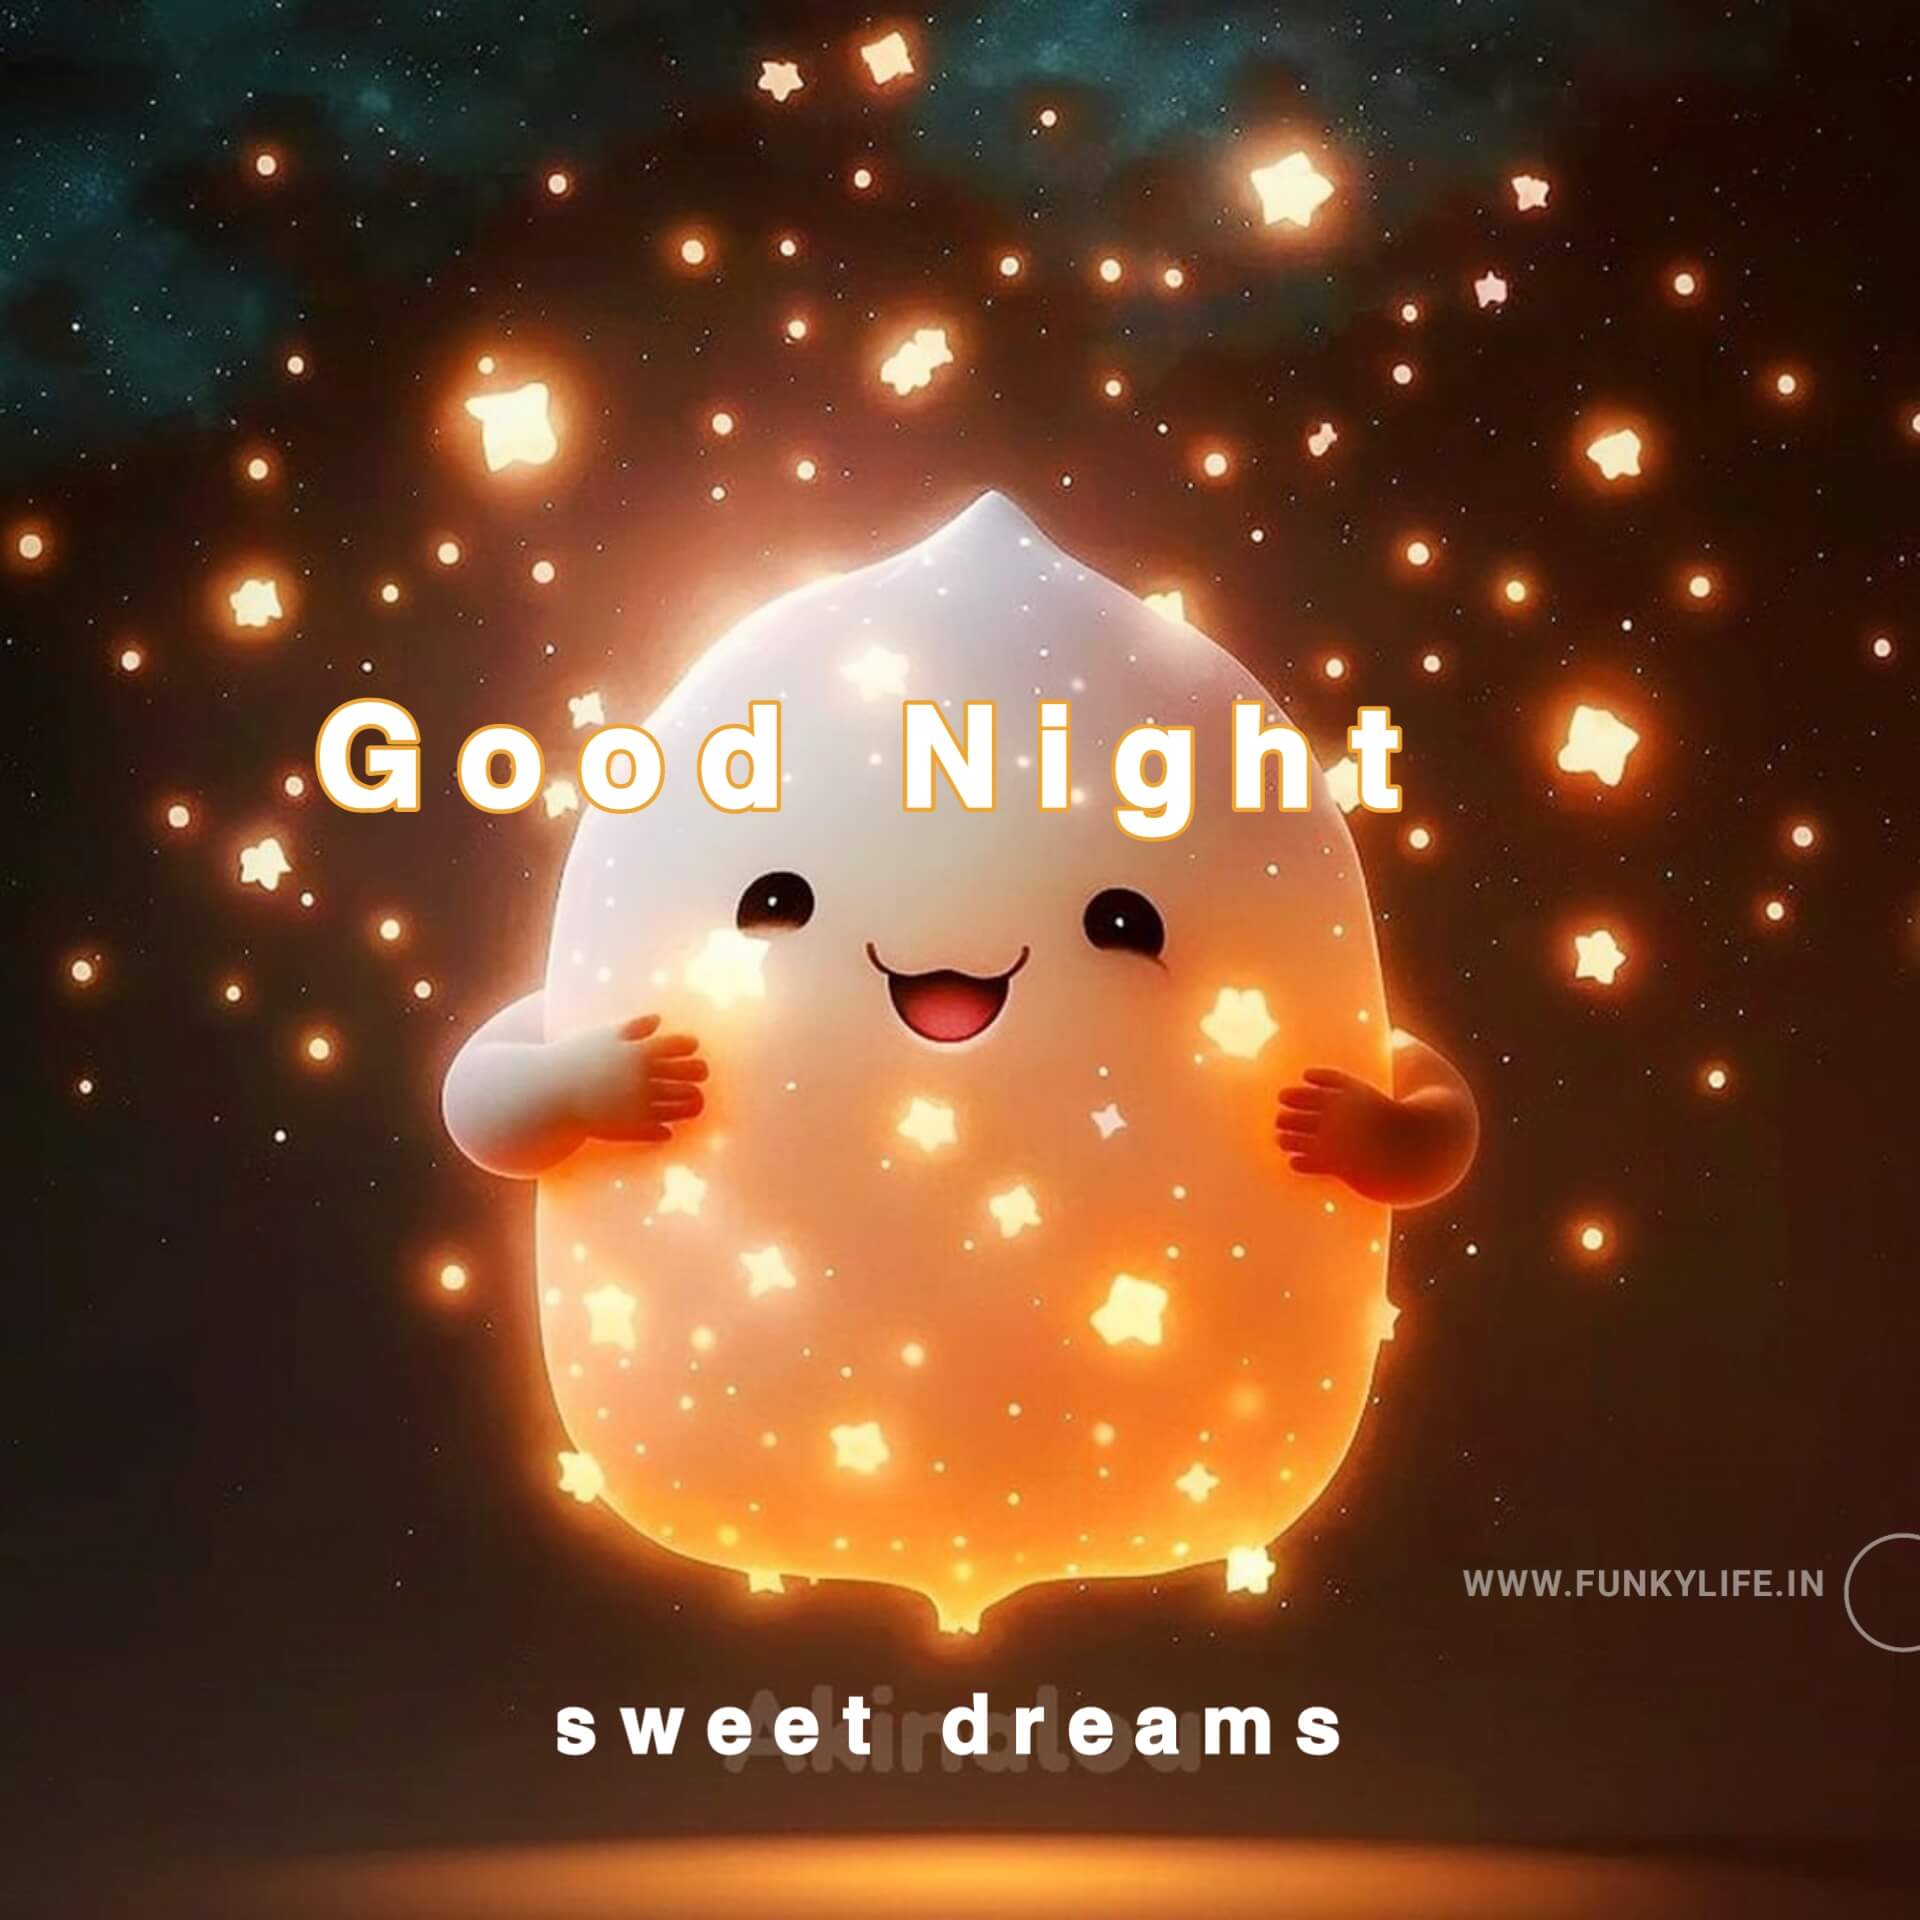 Cute Good Night Image